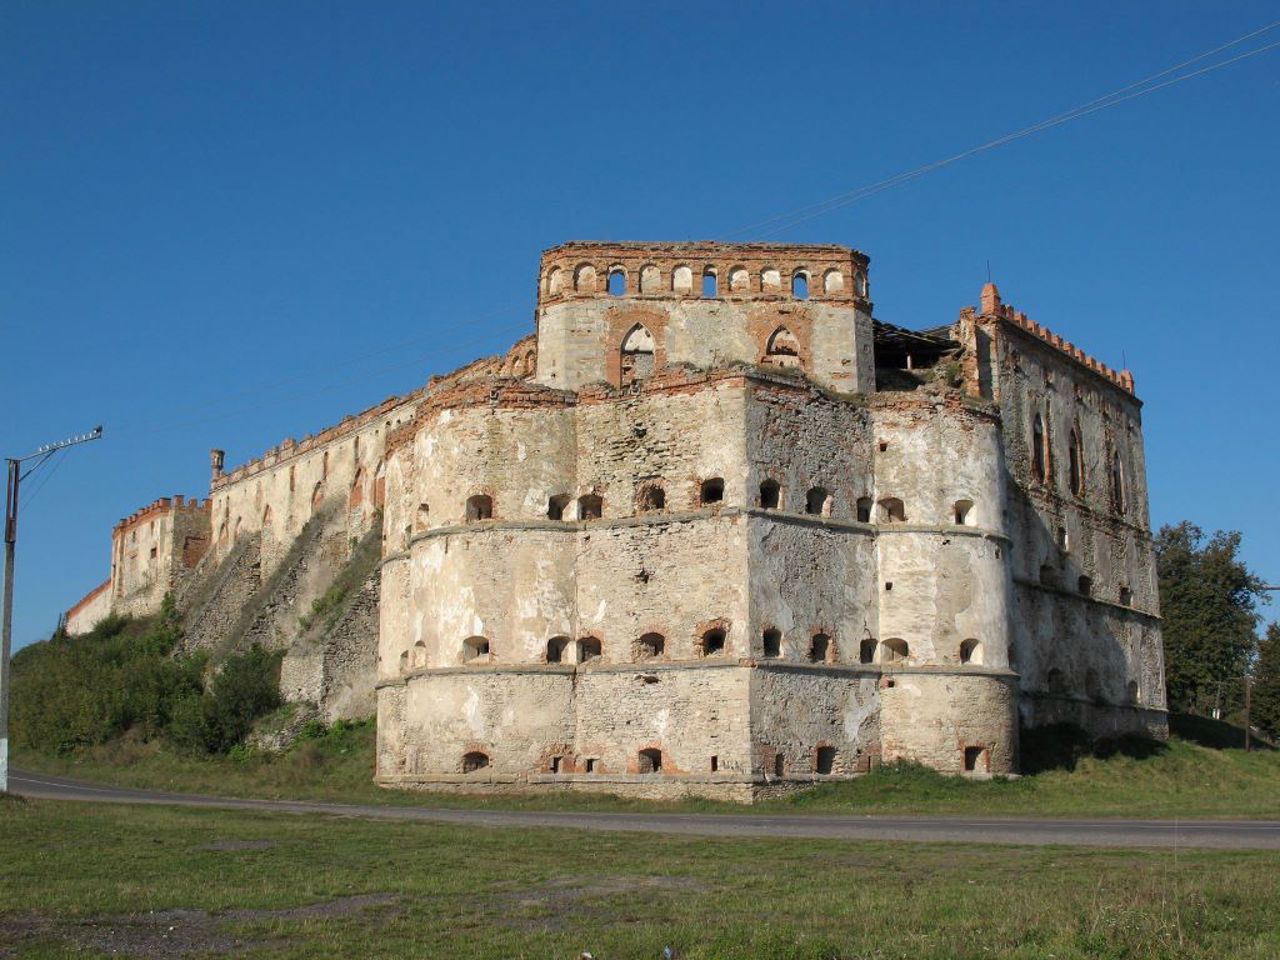 Medzhibizh Castle